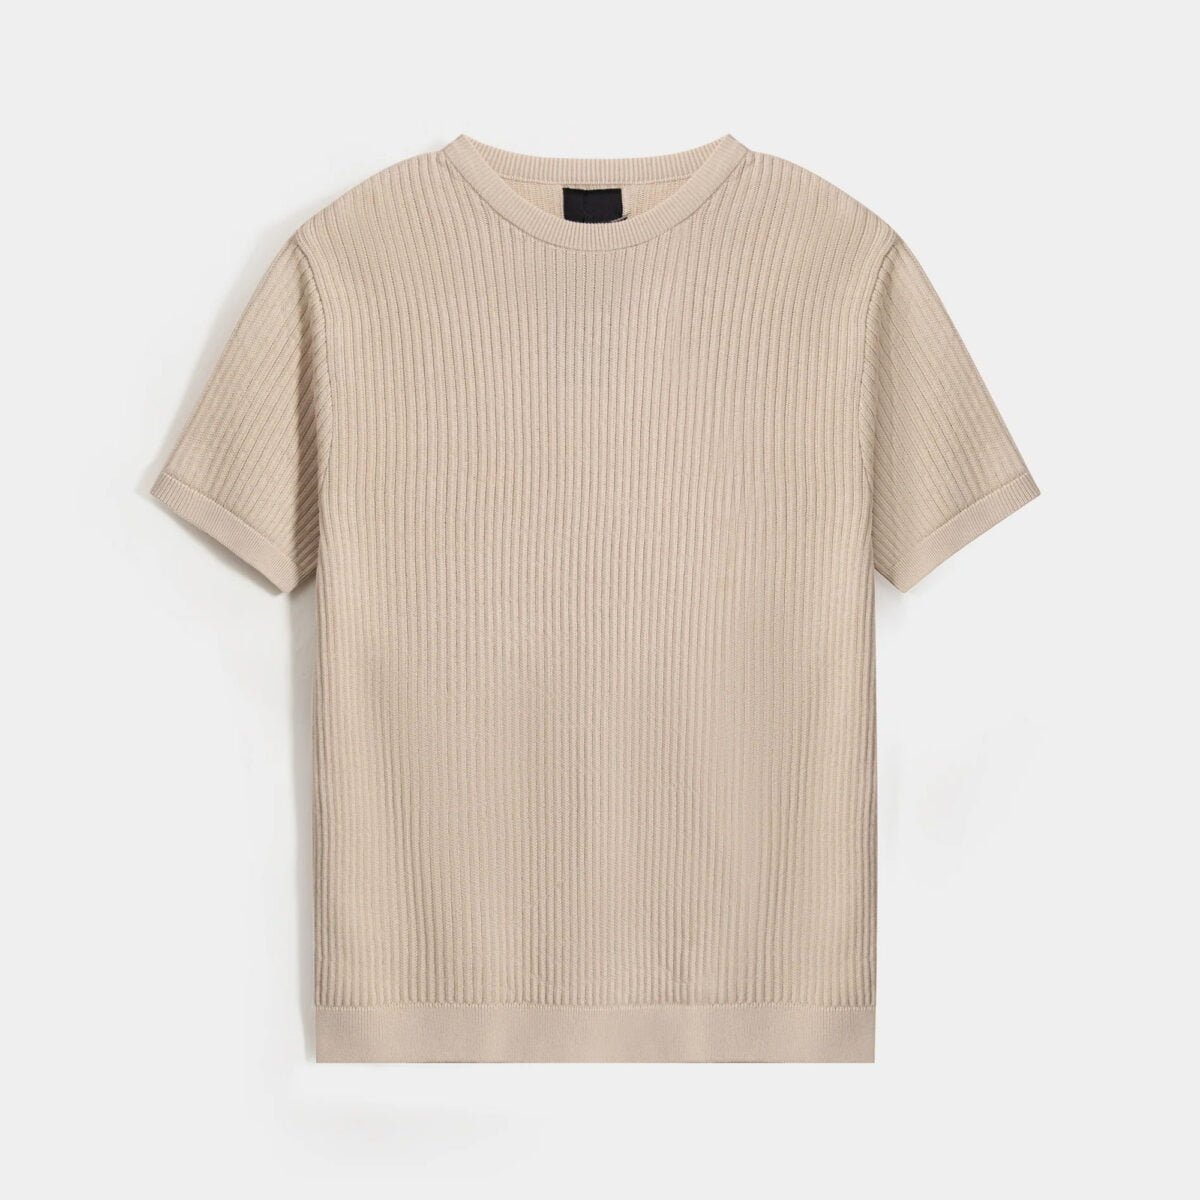 Custom made knit t-shirts